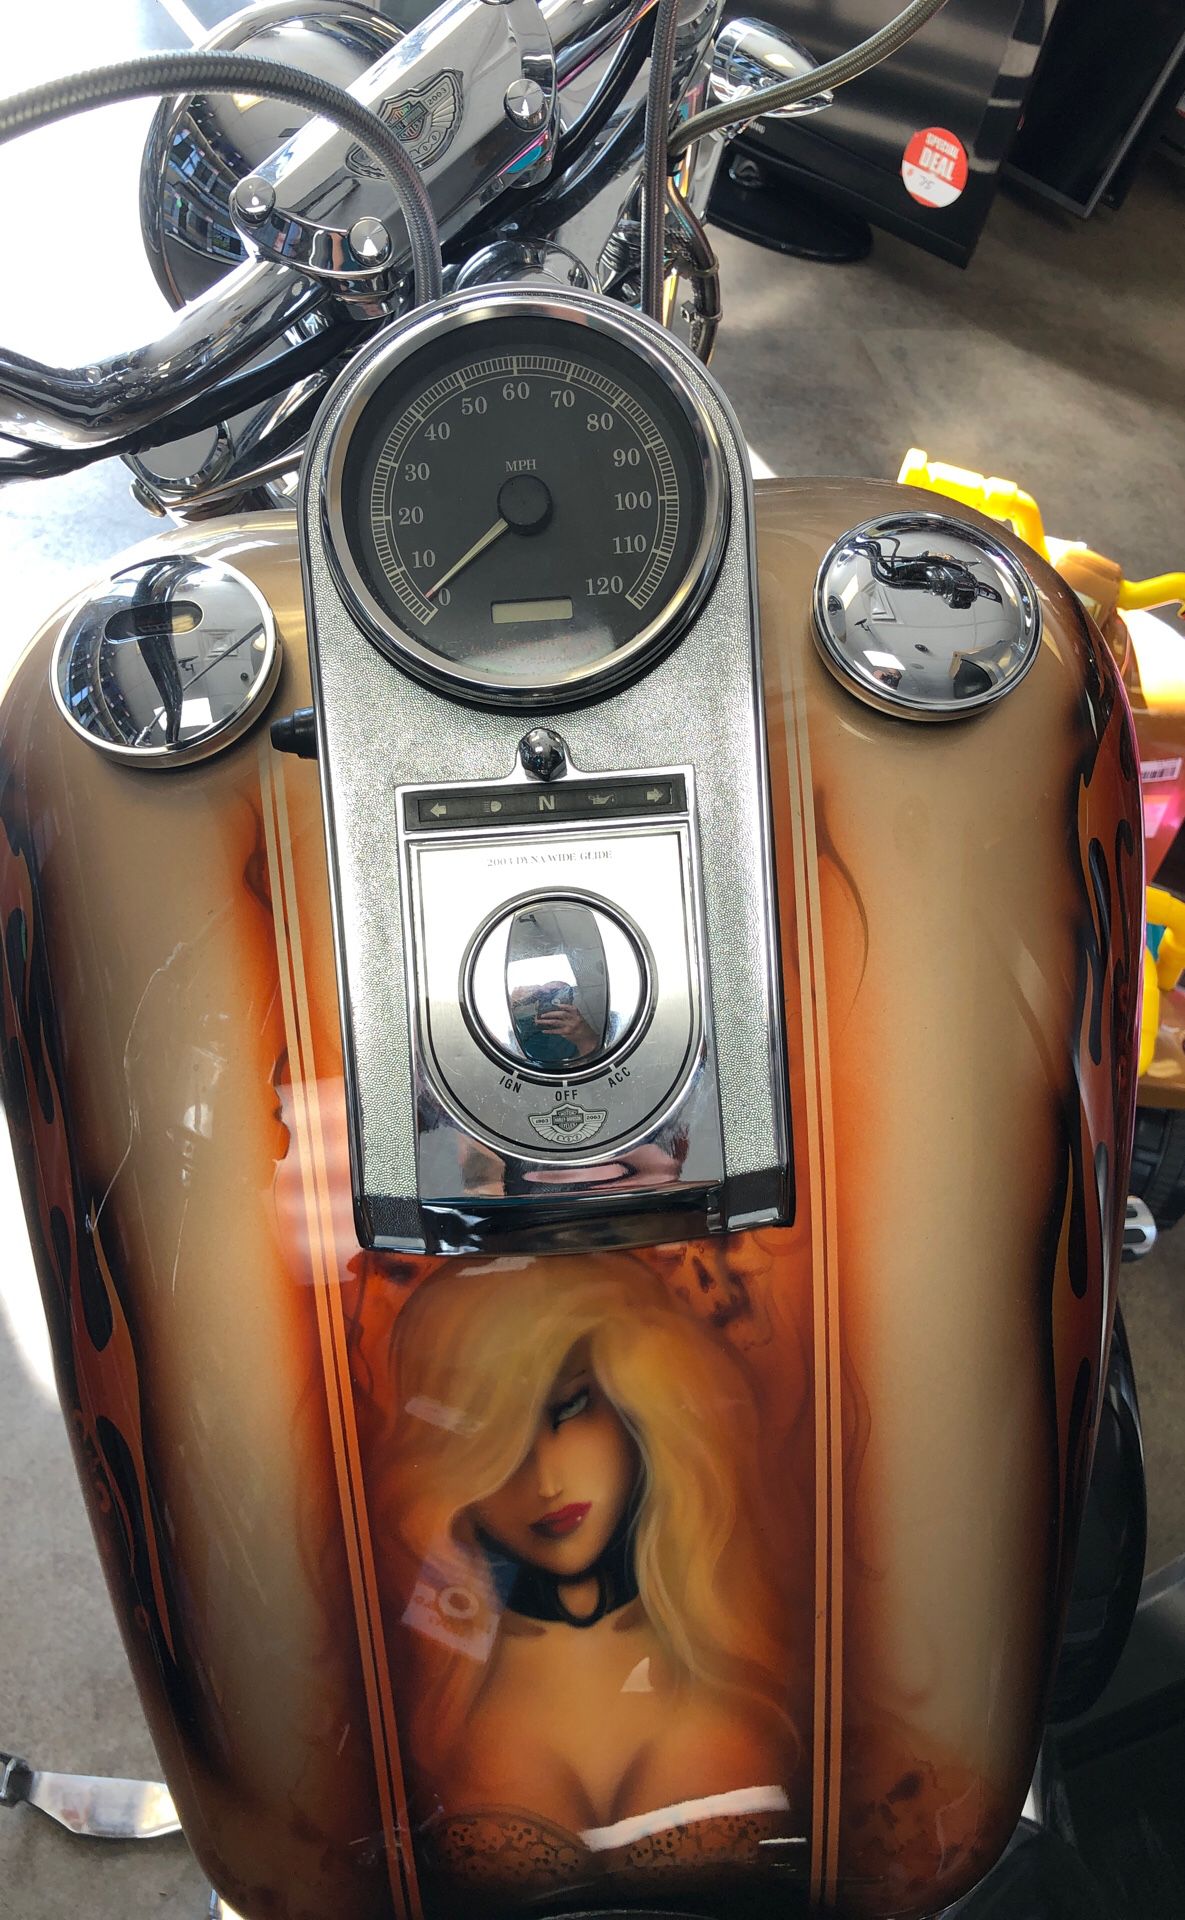 2003 Harley Davidson Dyna Wide Glide Motorcycle